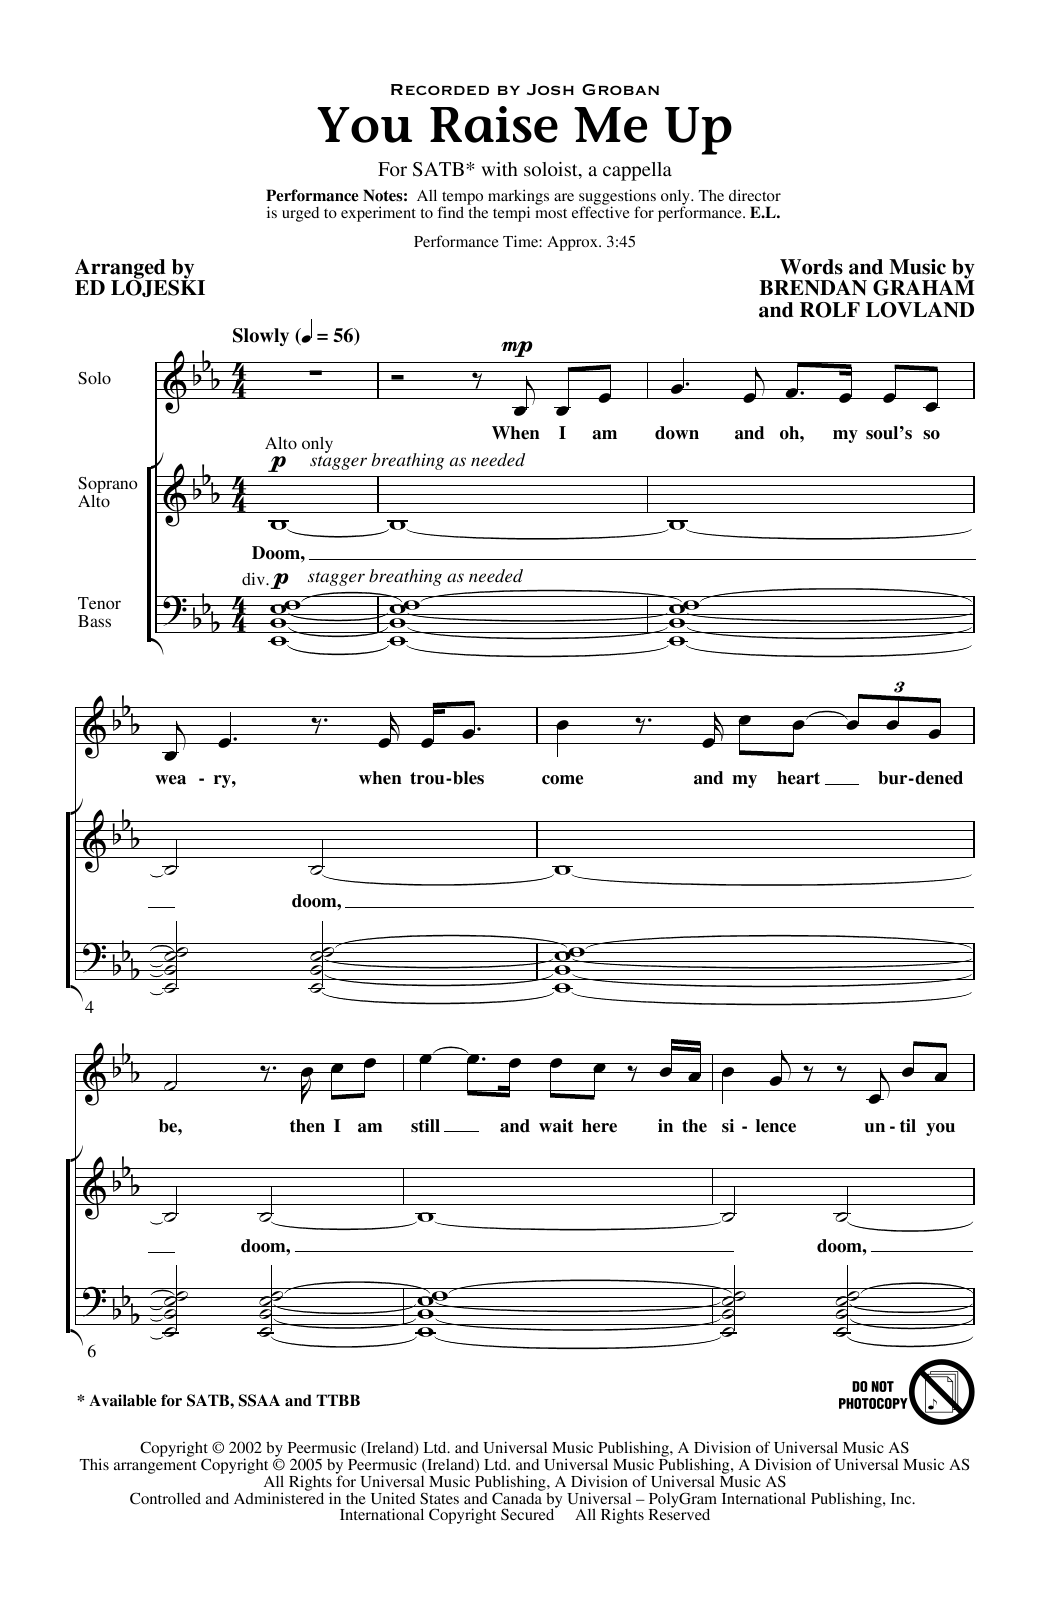 Josh Groban You Raise Me Up (arr. Ed Lojeski) Sheet Music Notes & Chords for SATB Choir - Download or Print PDF